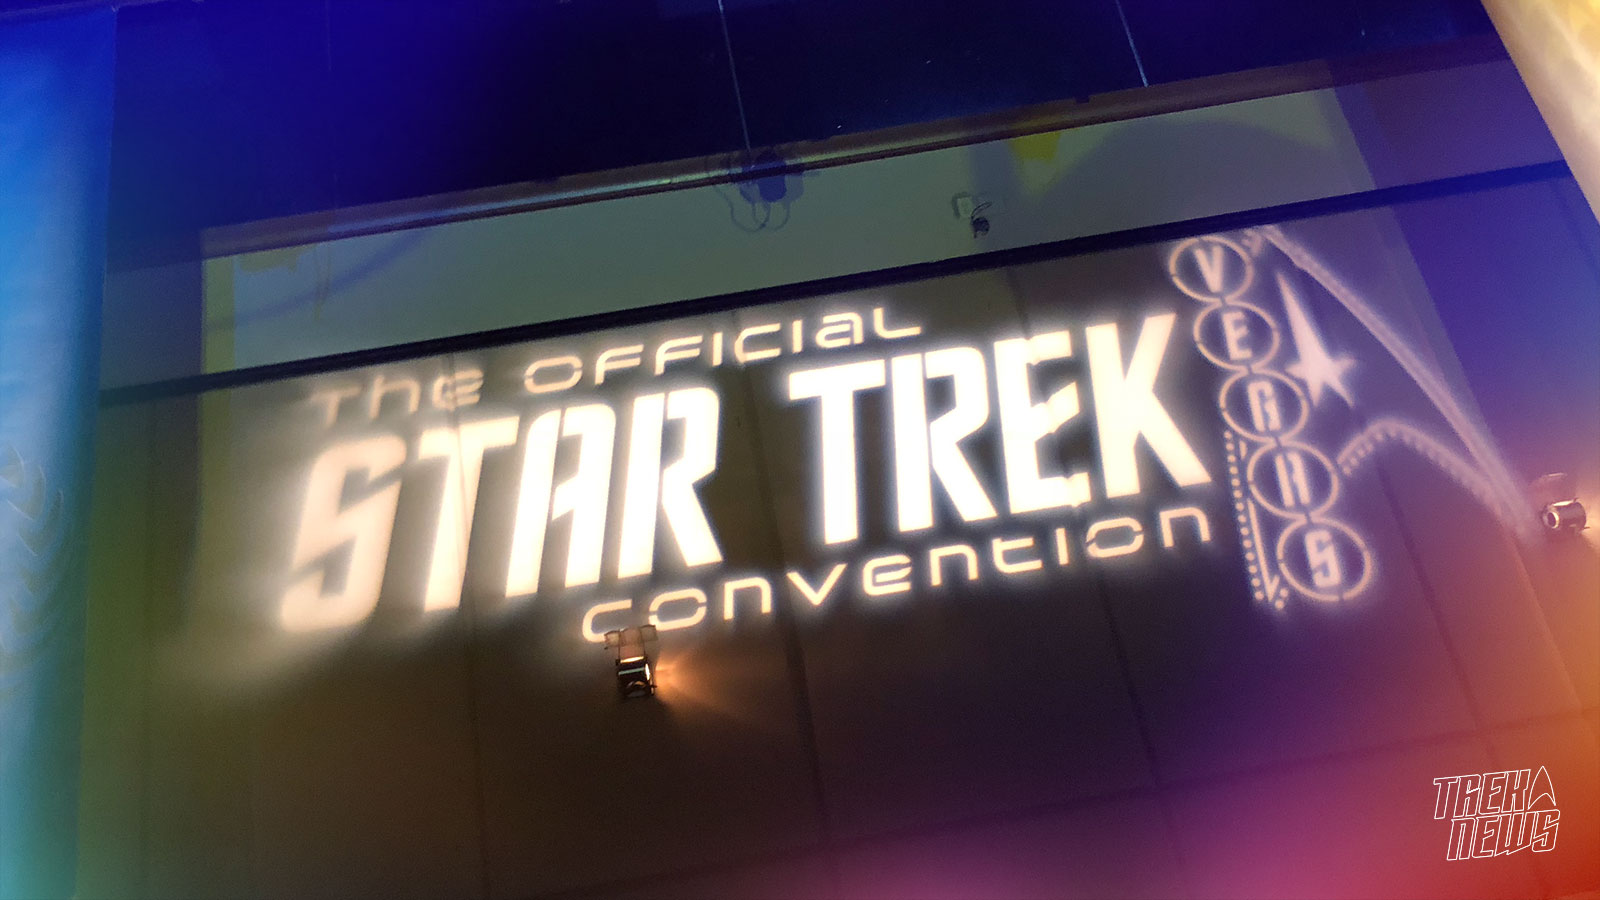 STAR TREK LAS VEGAS 2020 Cancelled, New Event Announced For 2021